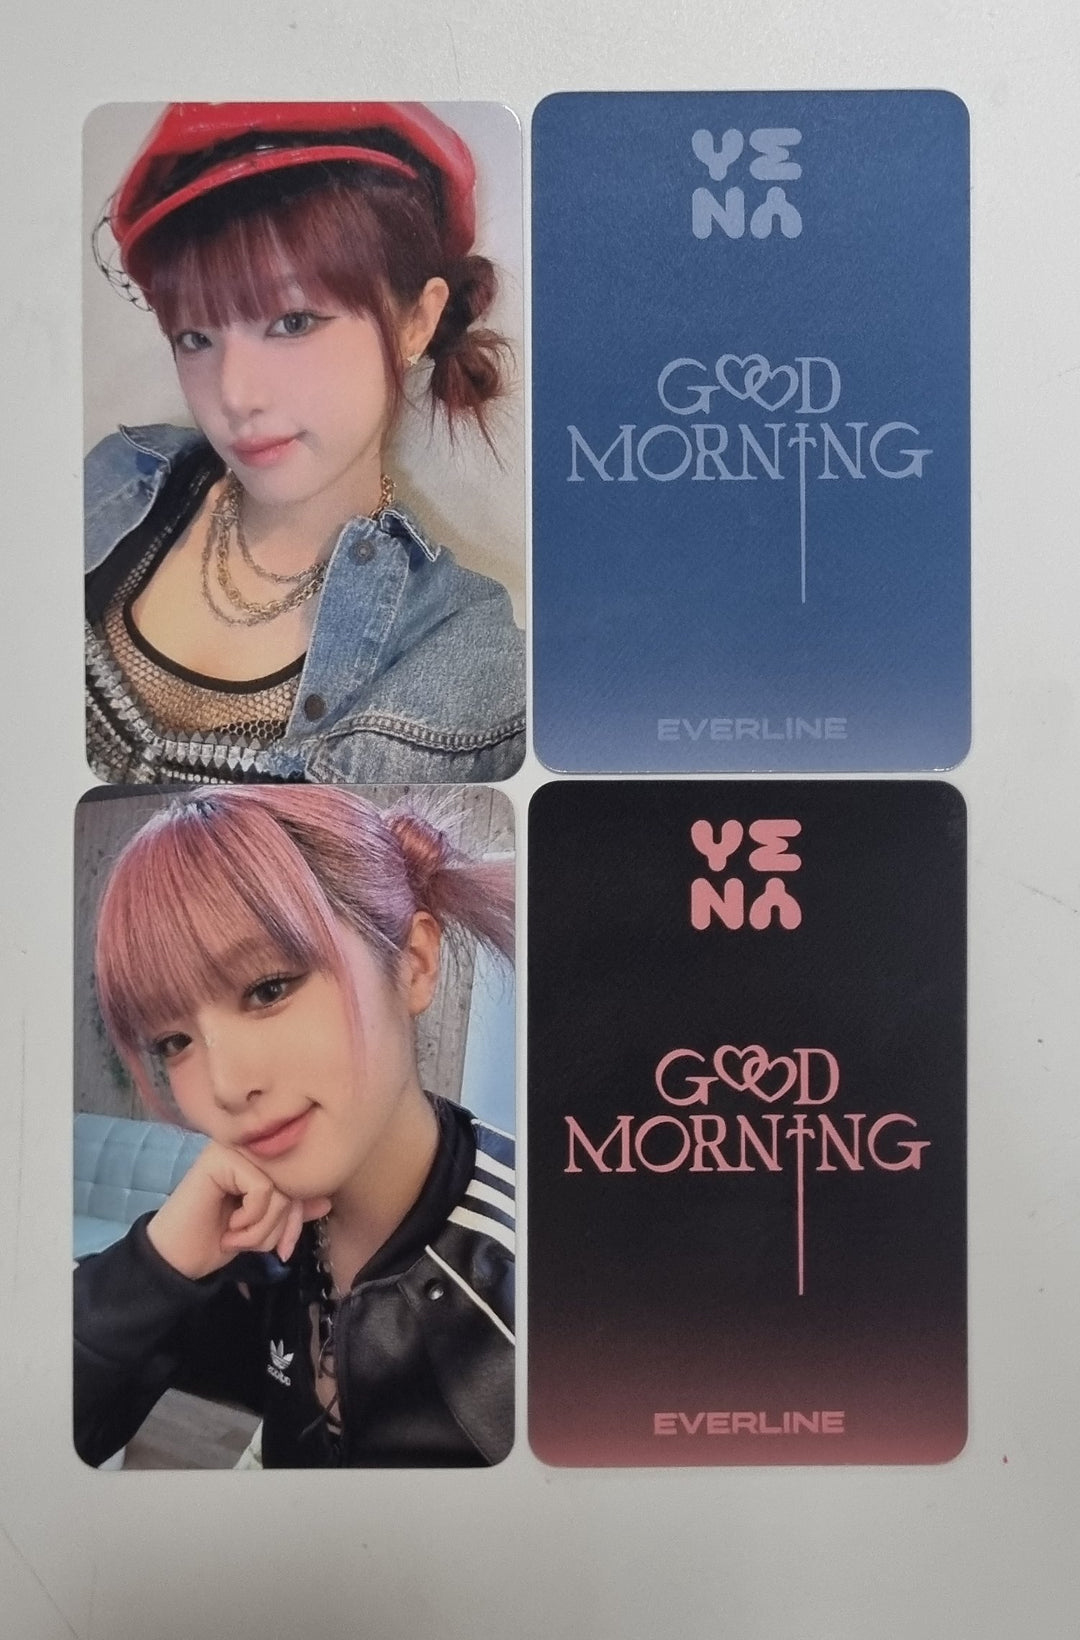 YENA「Good Morning」 - Everline ファンサインイベントフォトカード第 3 ラウンド [24.3.13]